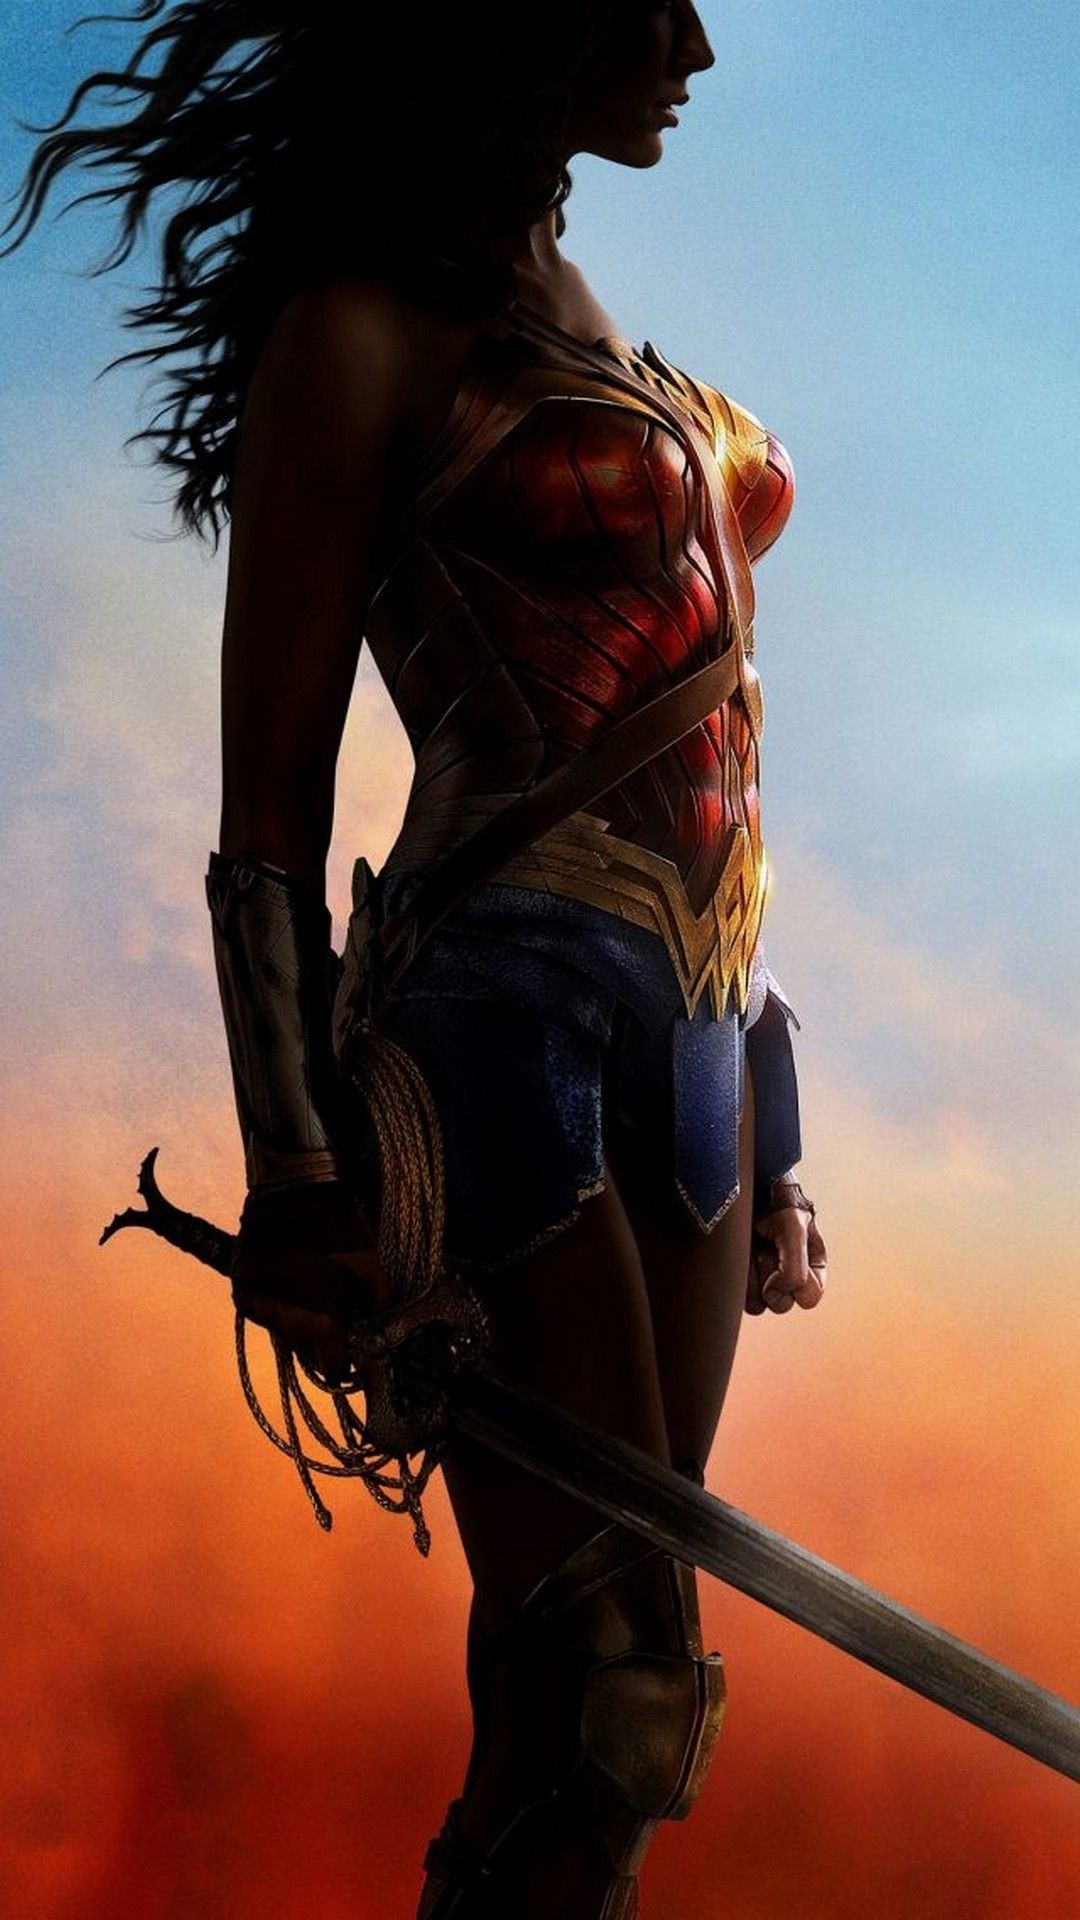 1080x1920 Wonder Woman Wallpaper For Mobile - Best iPhone Wallpaper